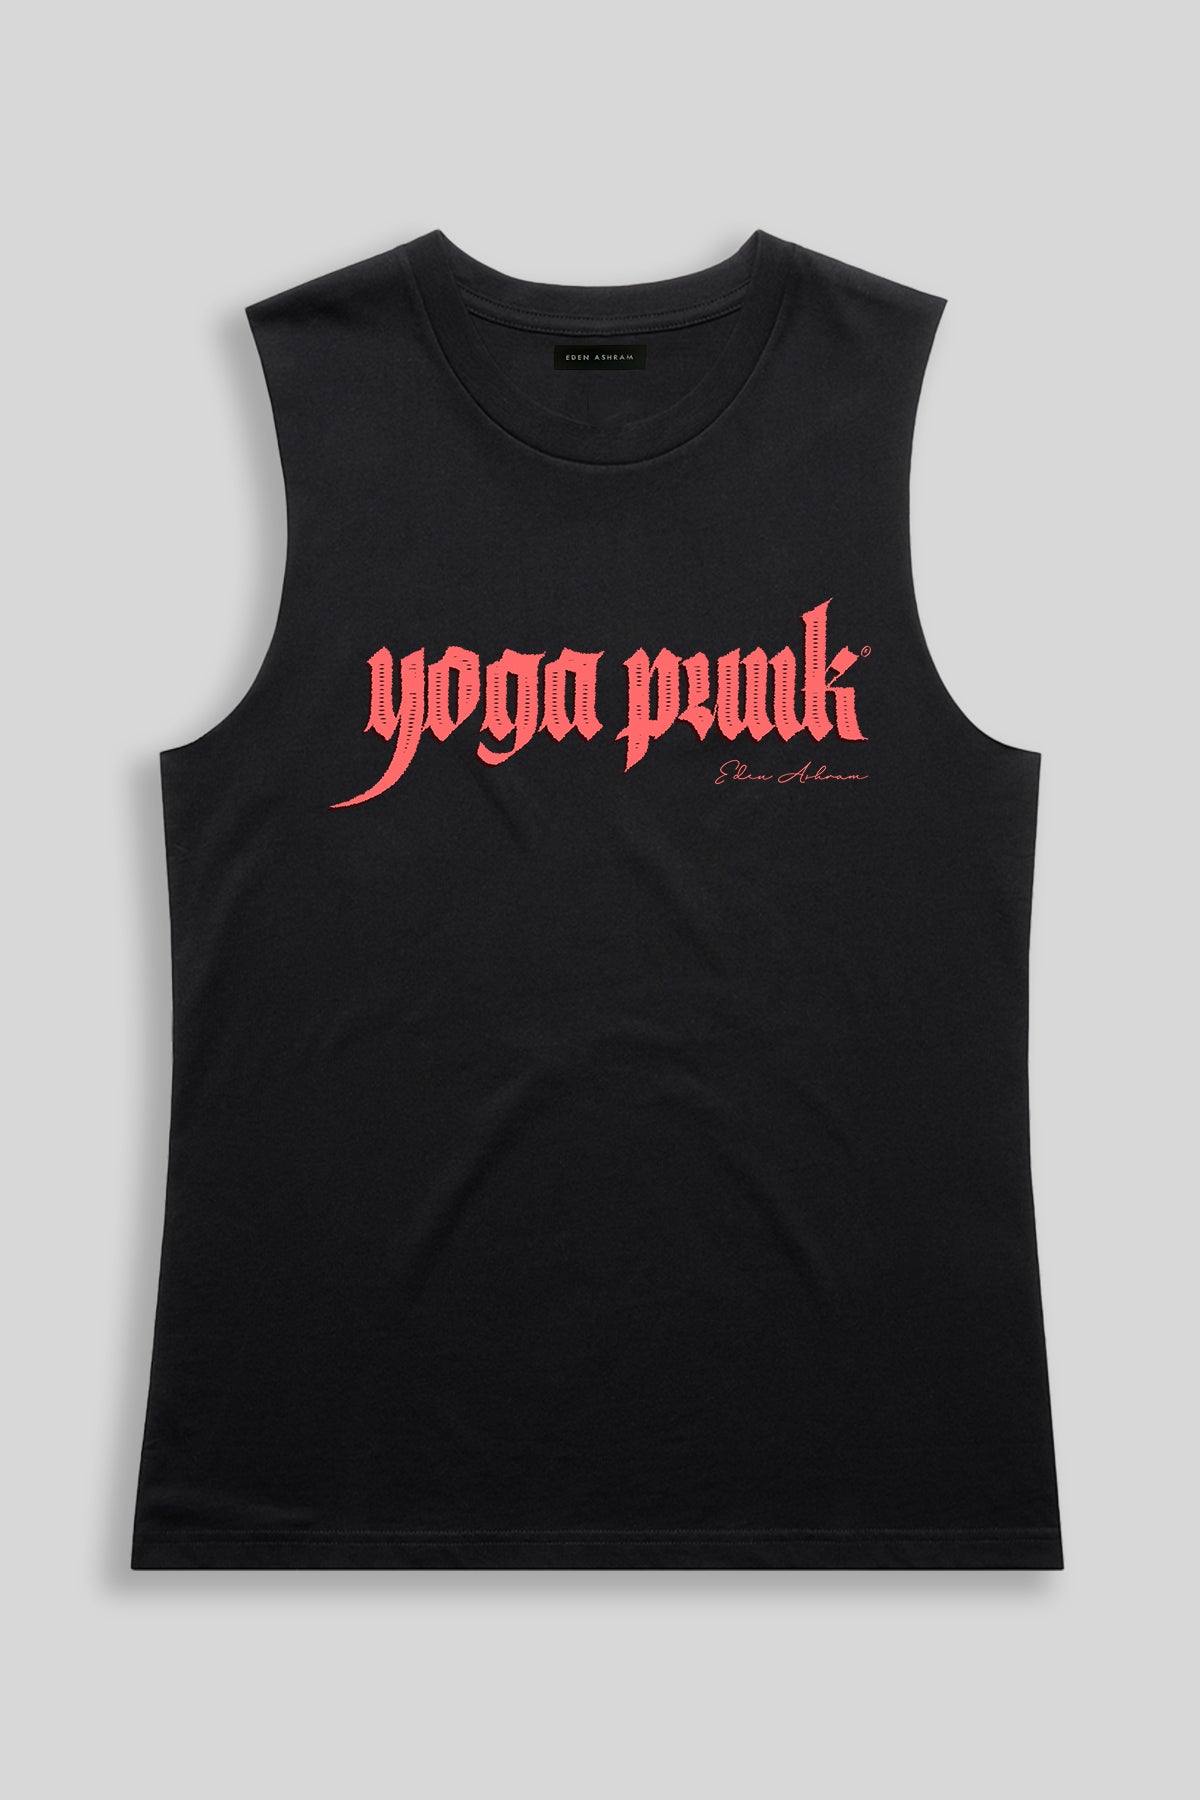 Eden Ashram Yoga Punk Camden Tank Black